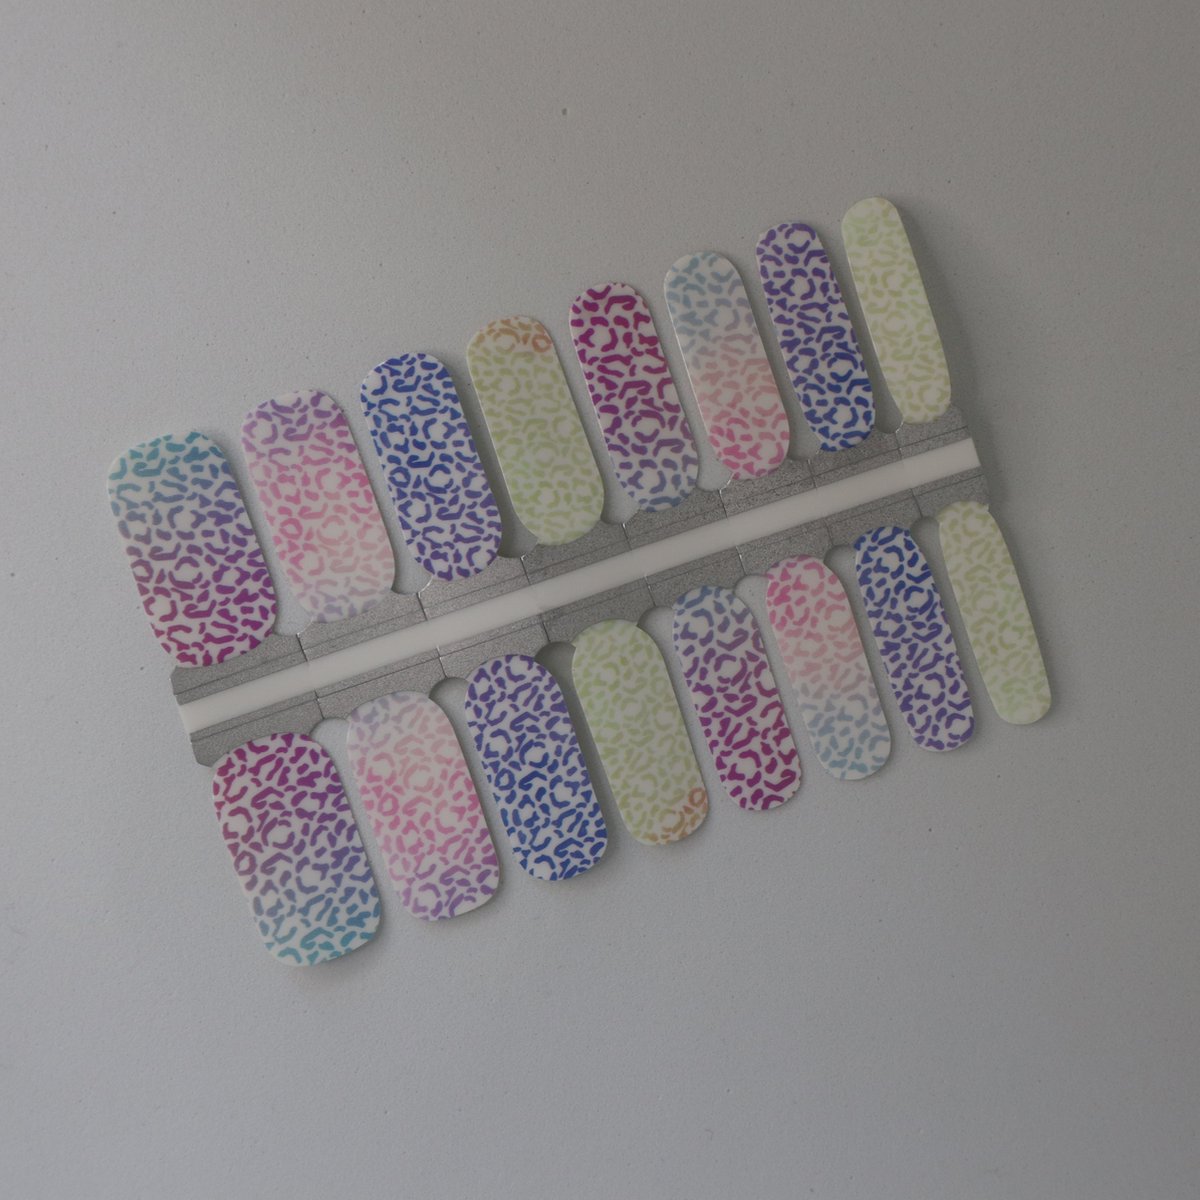 YellowSnails - Nagel Wraps - Rainbow panter - Nagel Stickers - Nagel Folie - Nail Wraps - Nail Stickers - Nail Art - Nail Foil